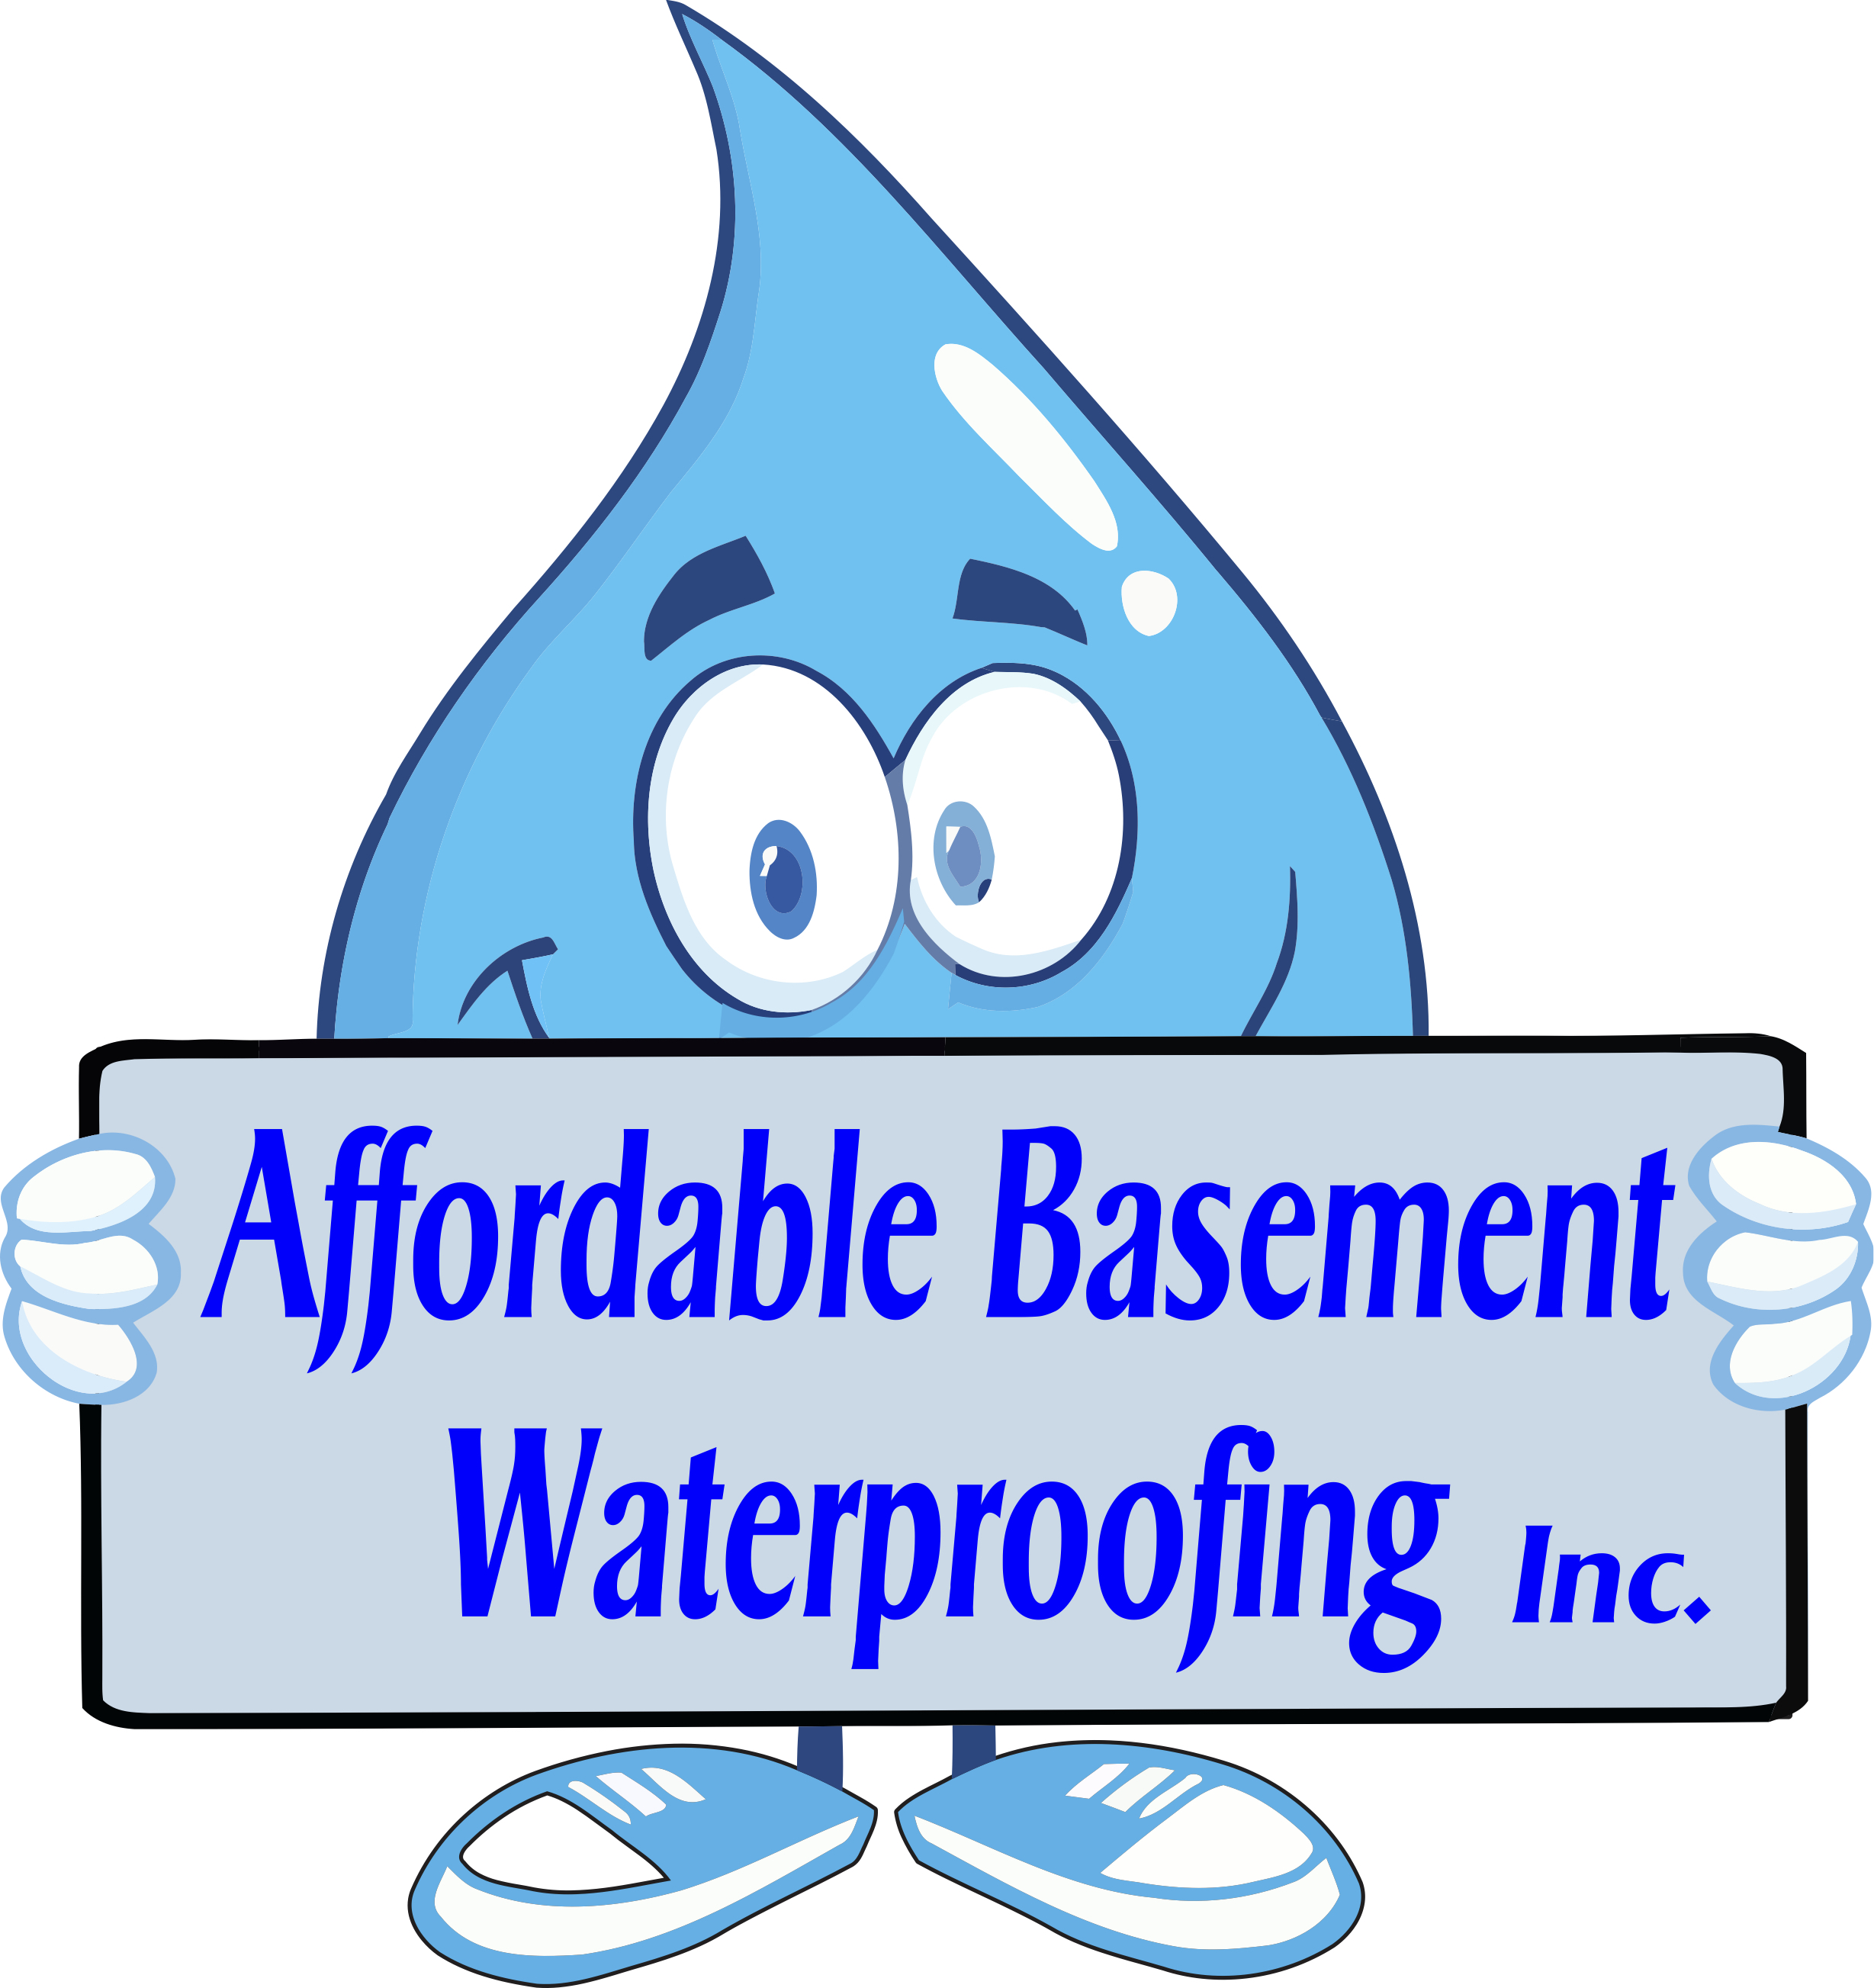 Affordable Basement Waterproofing, Inc. Logo